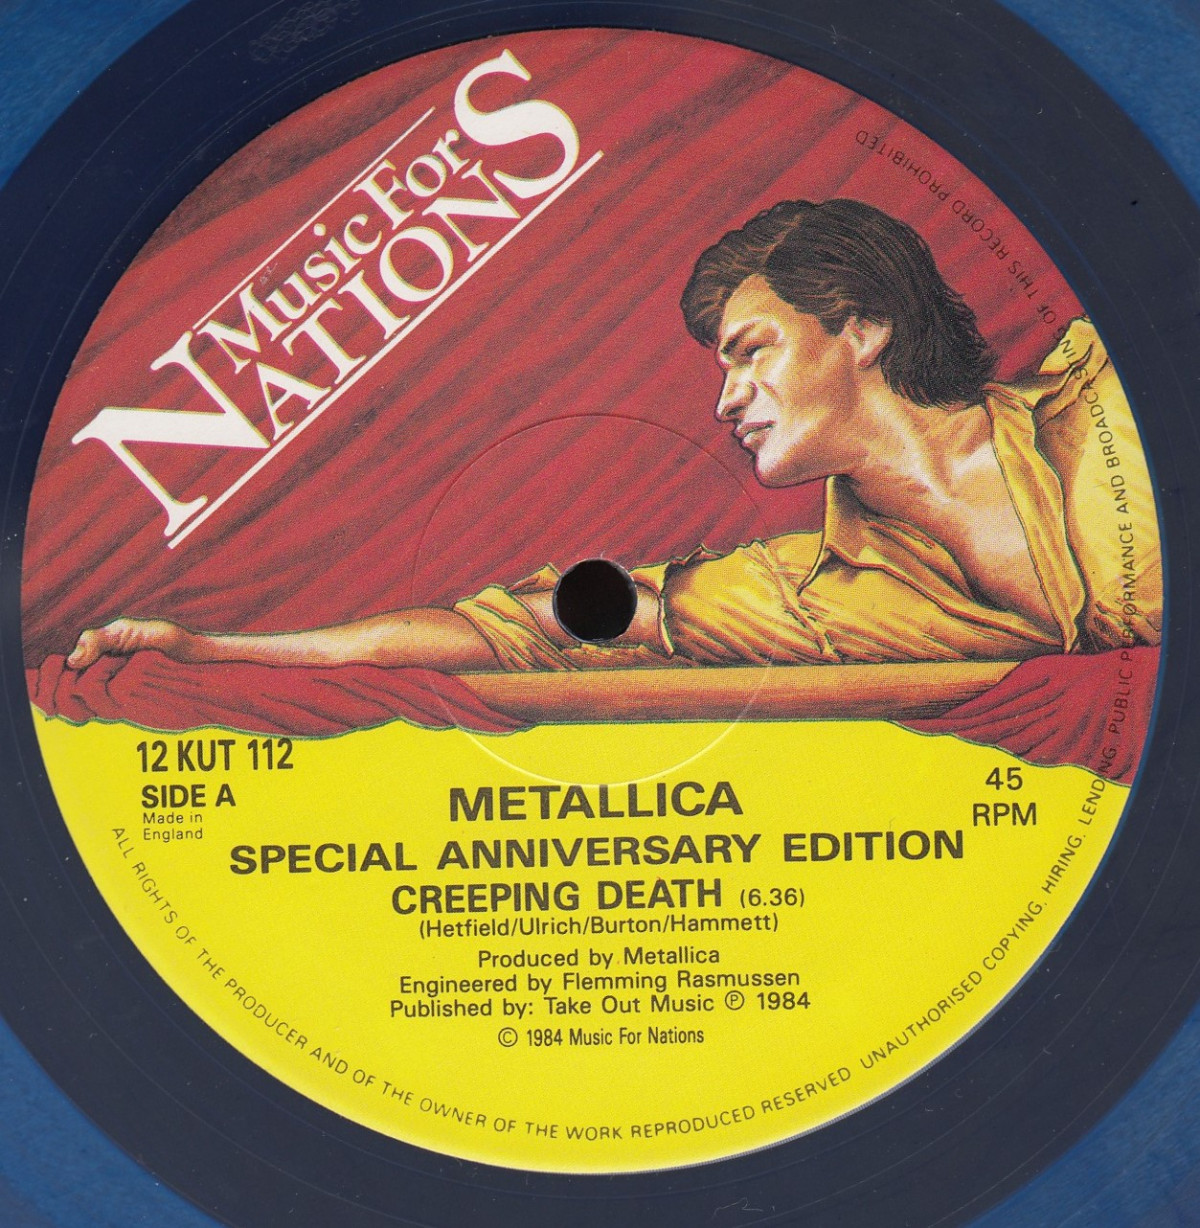 Metallica Creeping Death, Music For Nations united kingdom, 12" blue